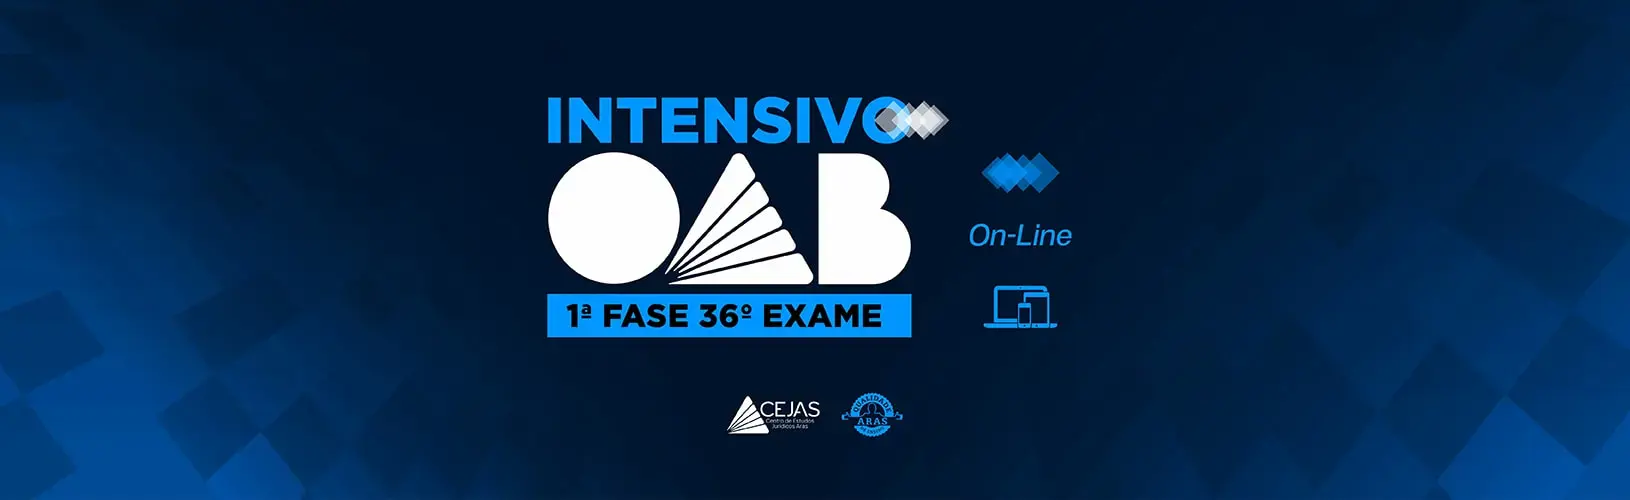 intensivo-oab-1-fase-36-exame-online